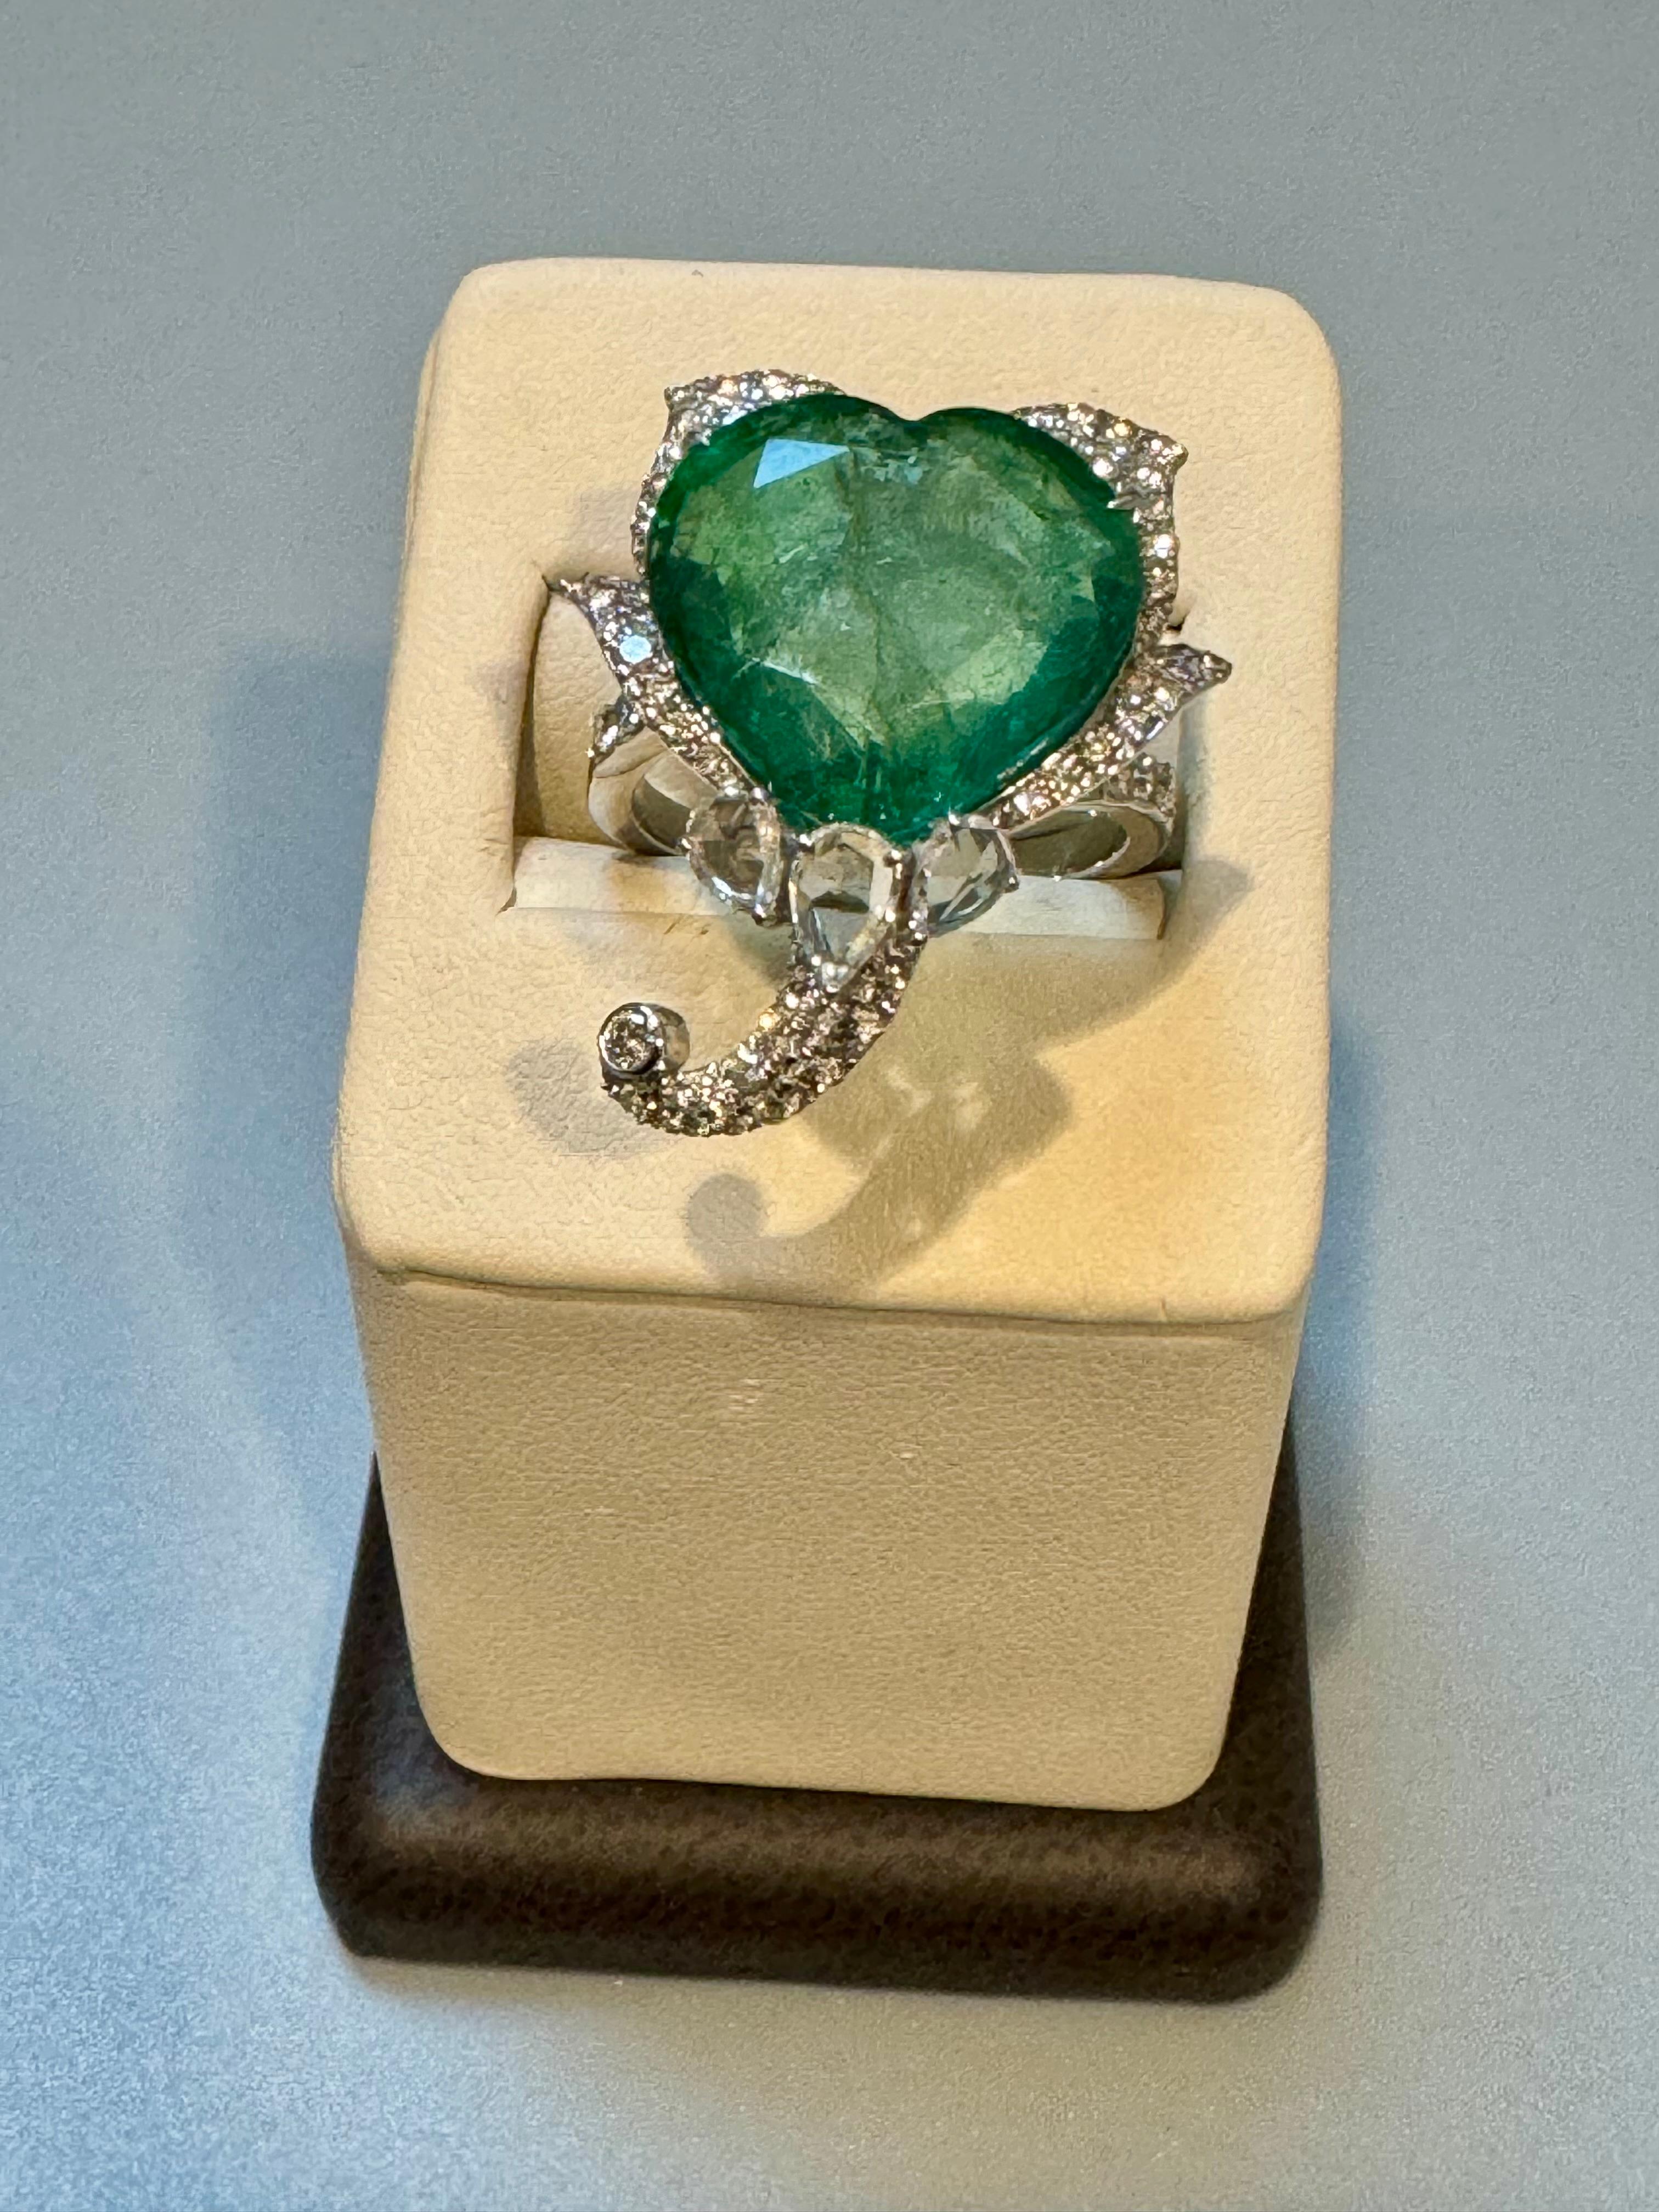 13 Ct  Zambian Heart Cut Emerald & 1.5 Ct Diamond Ring, 18 Kt Gold Size 8.5  For Sale 3